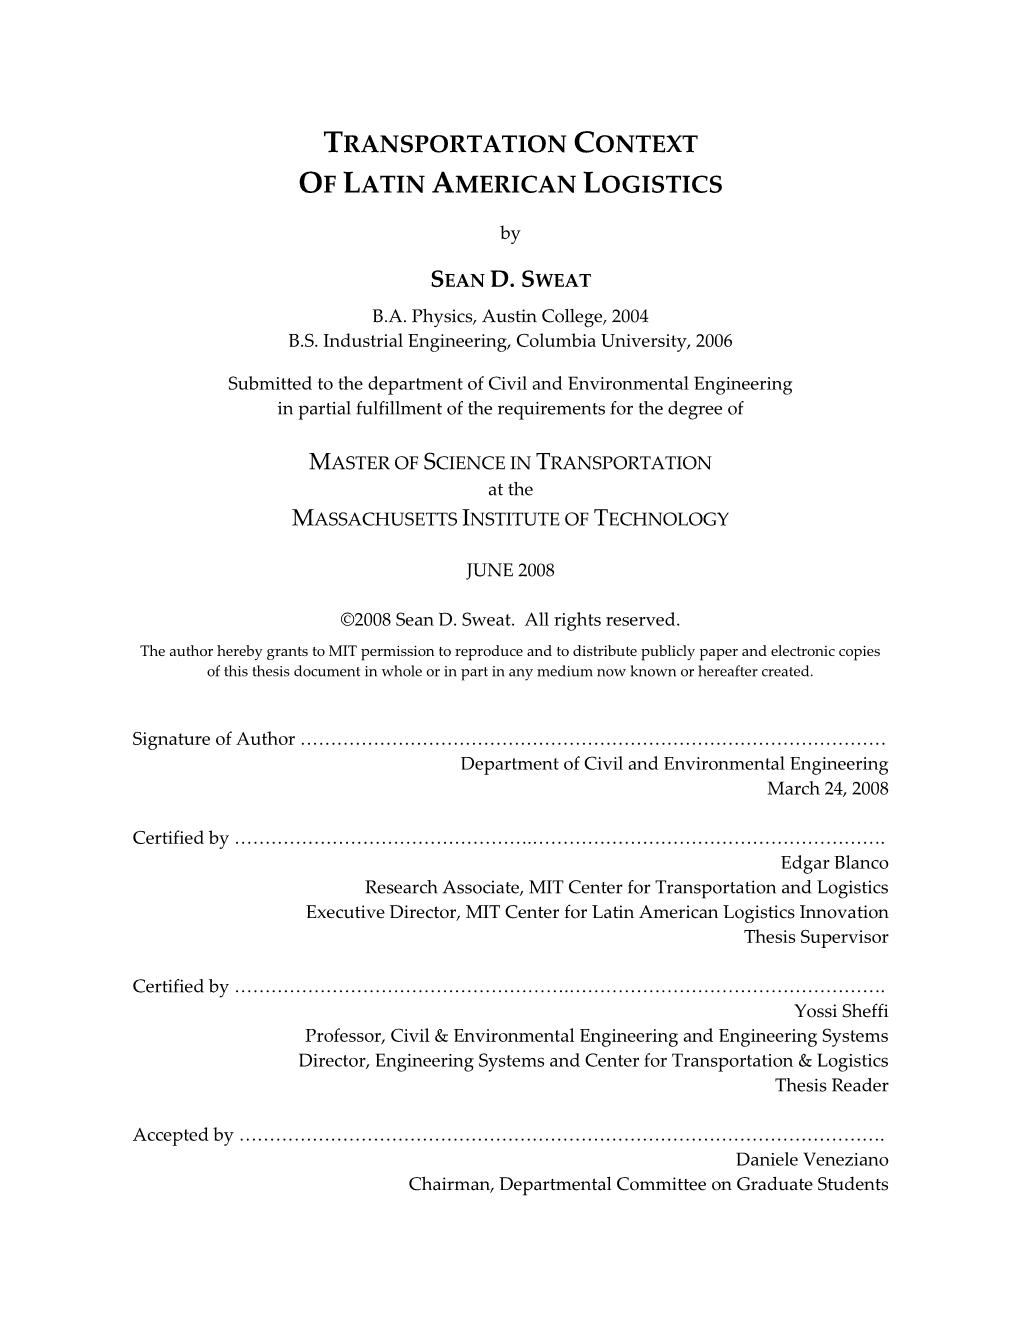 Transportation Context of Latin American Logistics